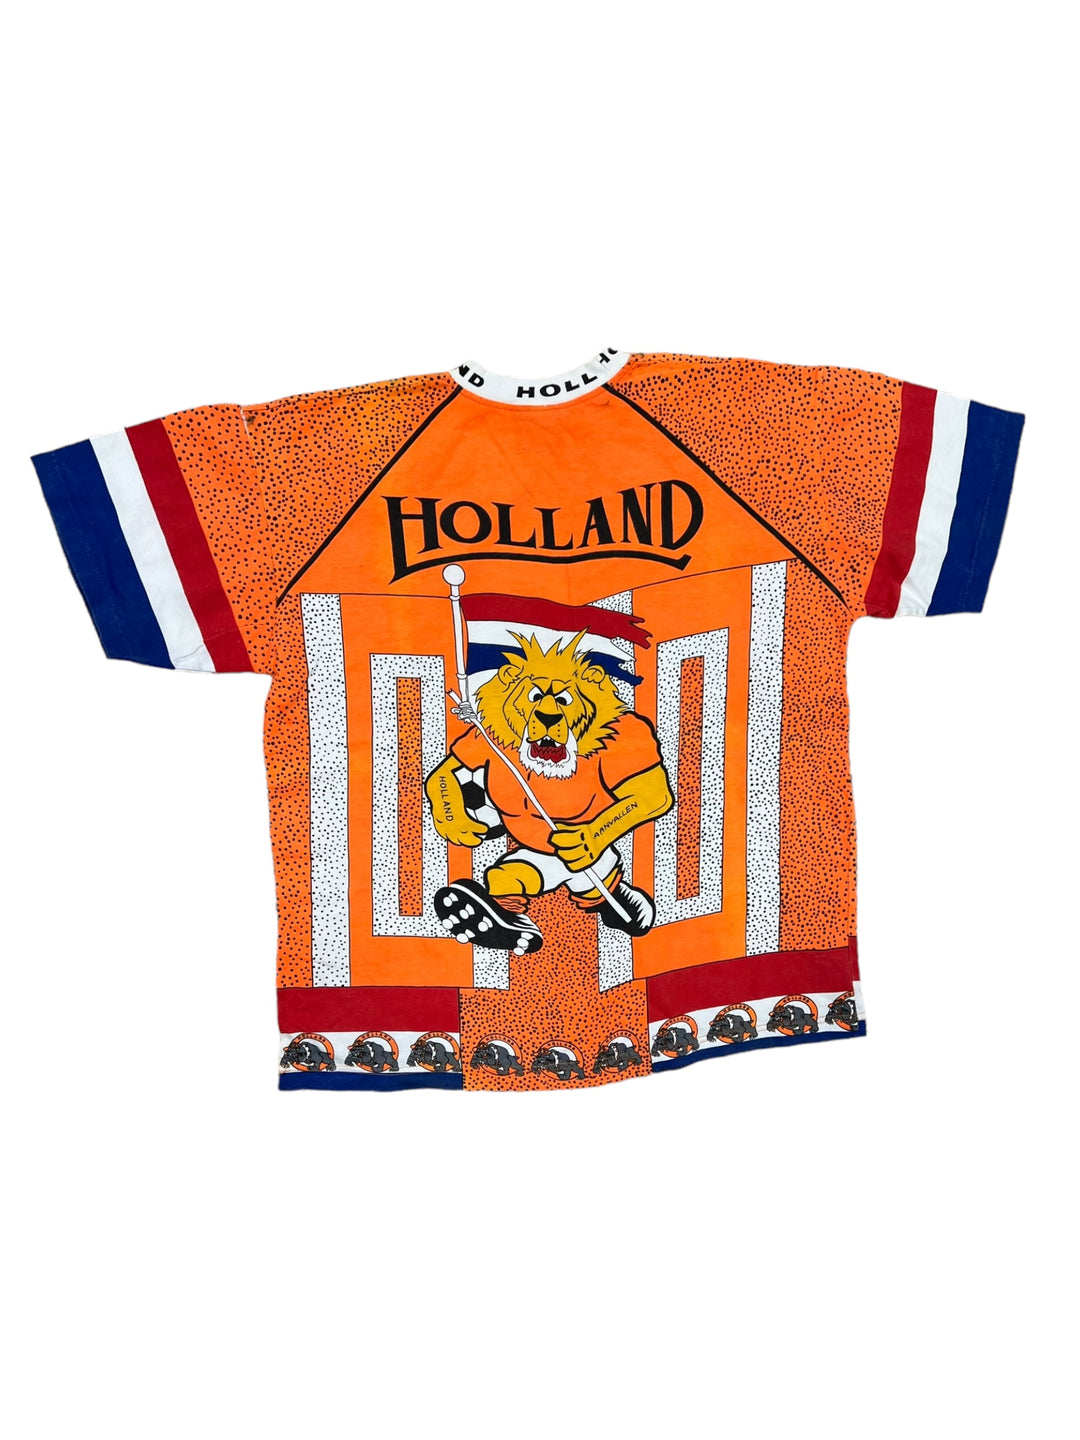 Rare 80/90s Fifa World Cup Netherlands Holland Football Tee men’s Medium